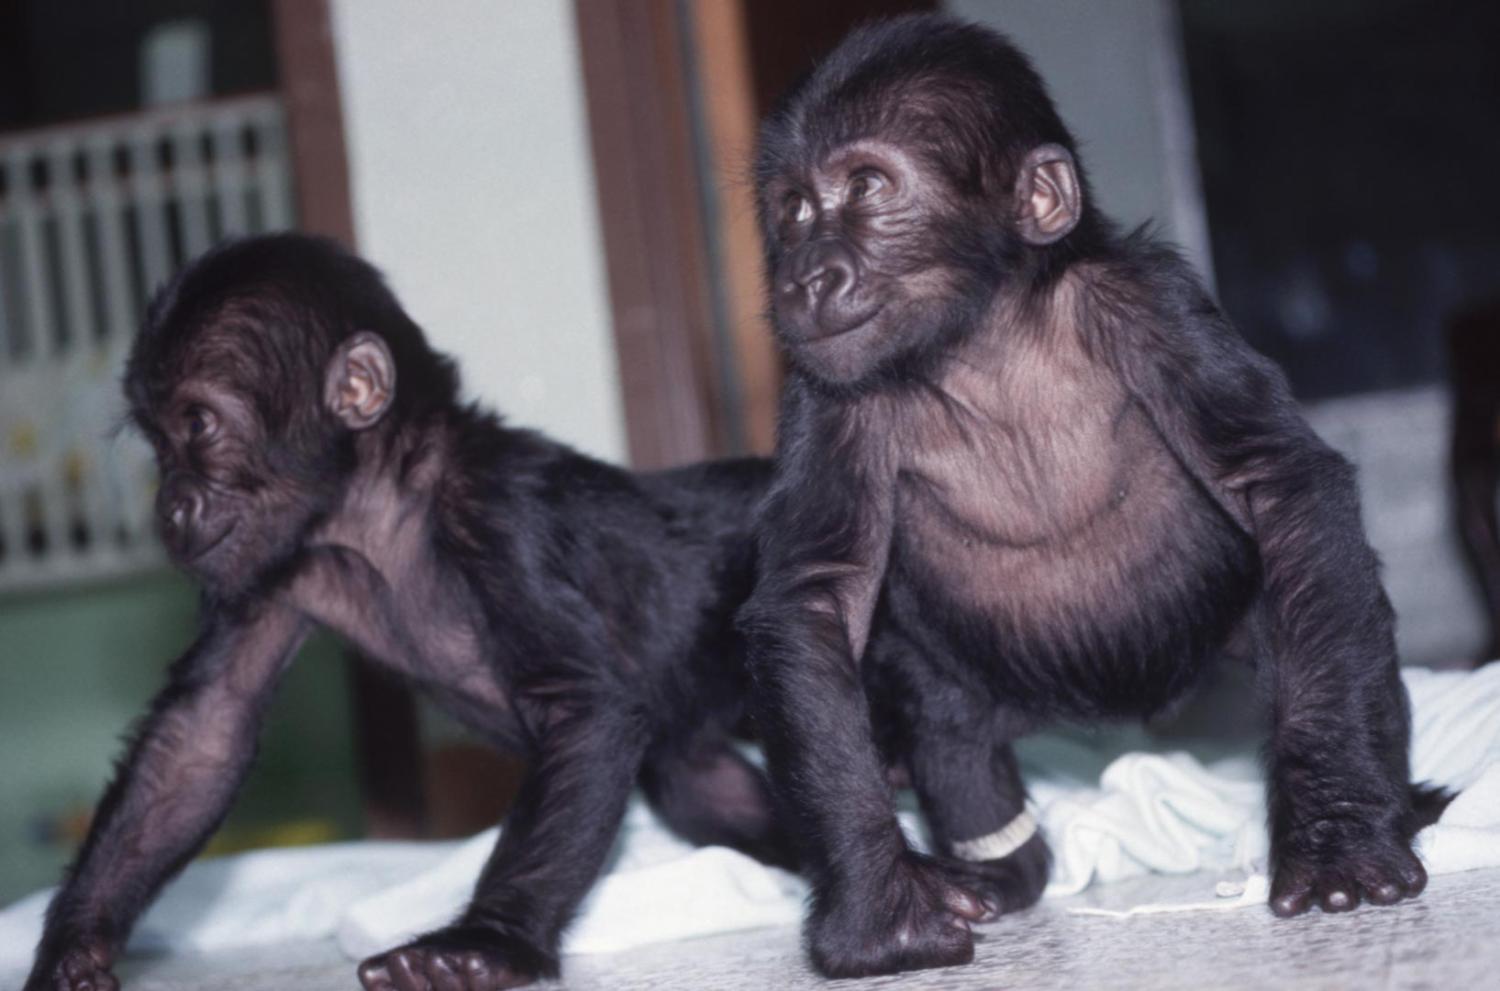 two gorilla babies